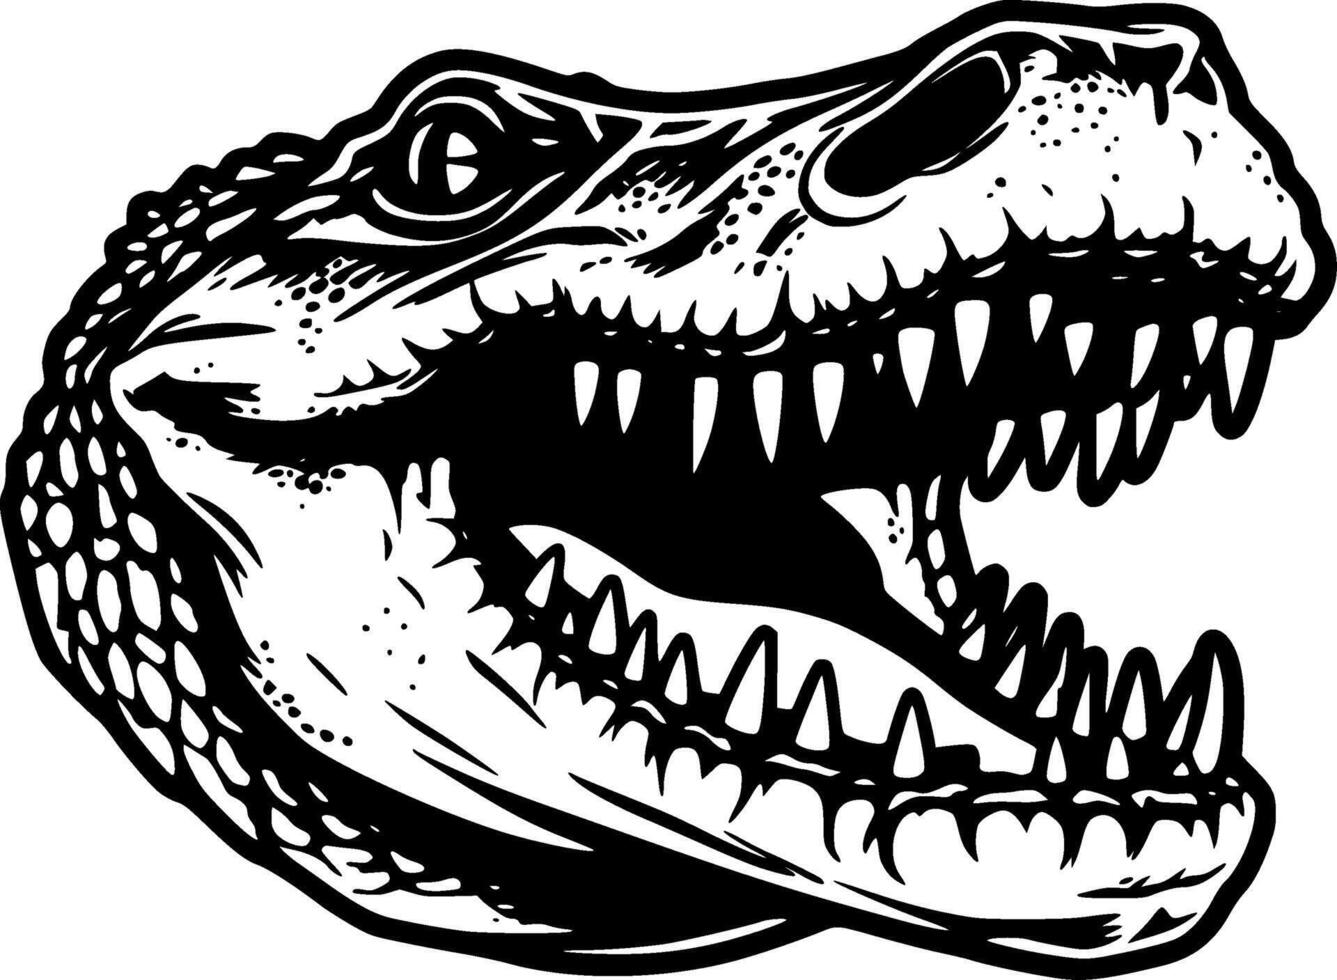 crocodile, minimaliste et Facile silhouette - illustration vecteur